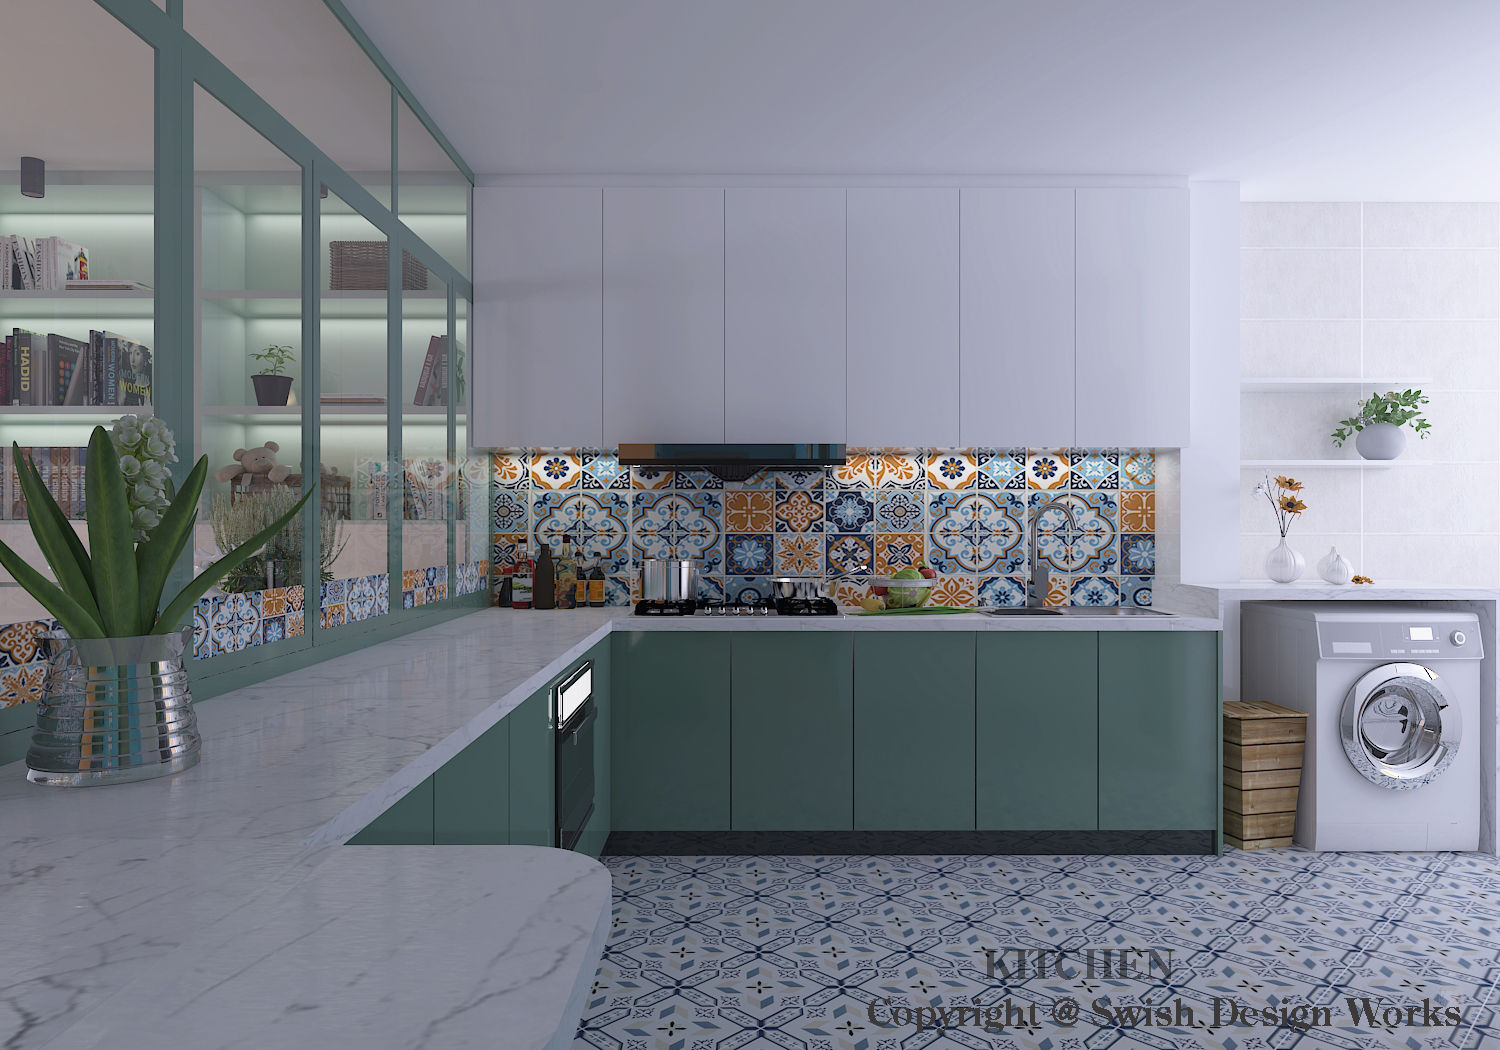 Kitchen Swish Design Works Modern kitchen Plywood kitchen,cabinets,mosaic,tiles,patterns,white,turquoise,backsplash,colourful,covelight